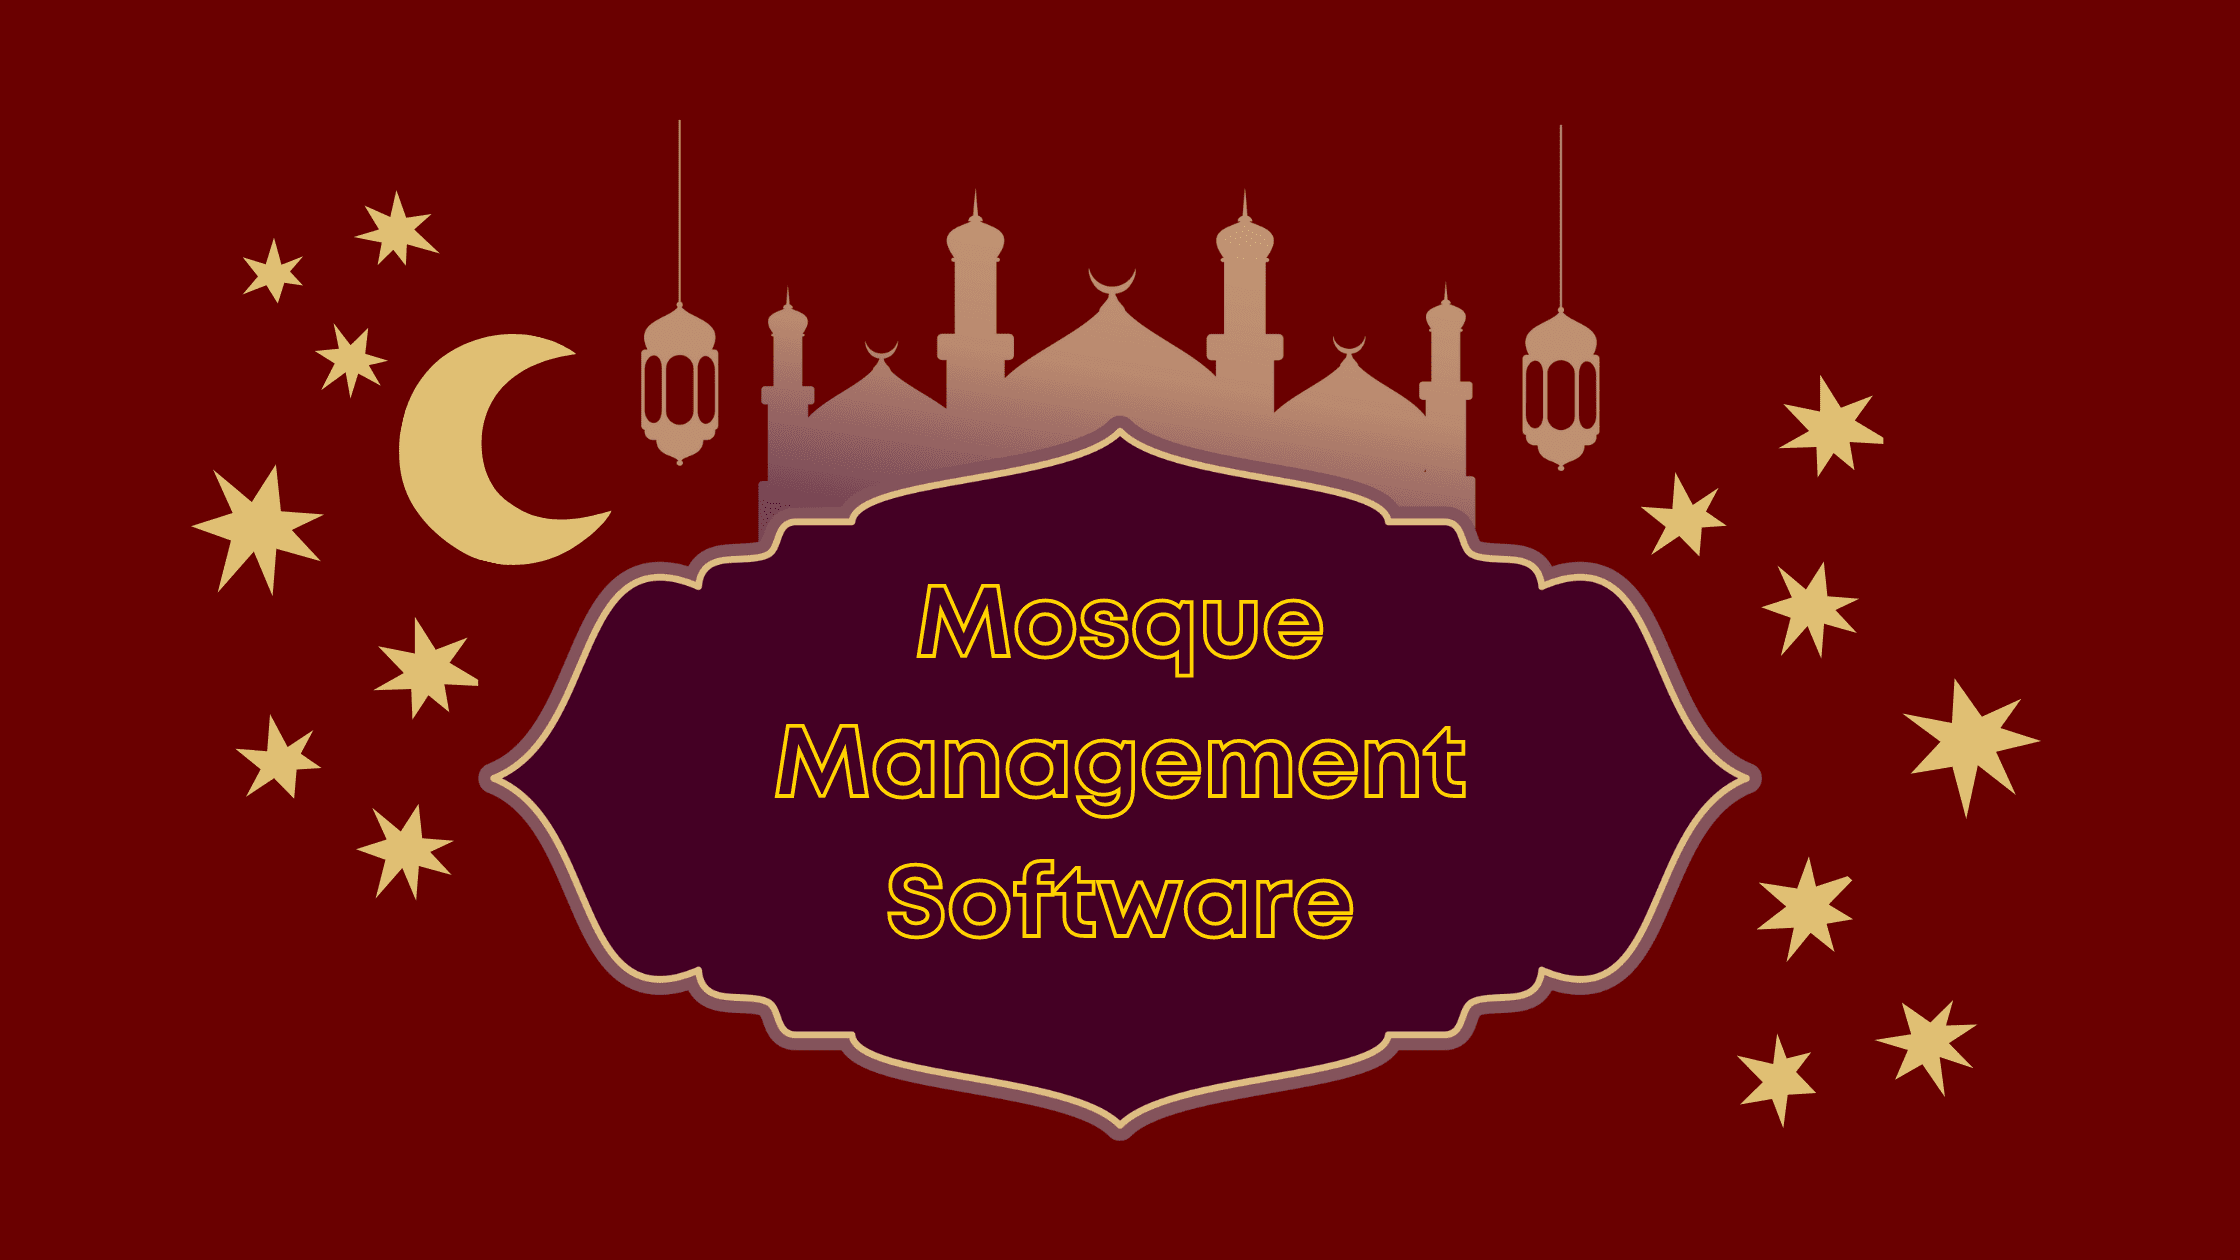 Mosque management software